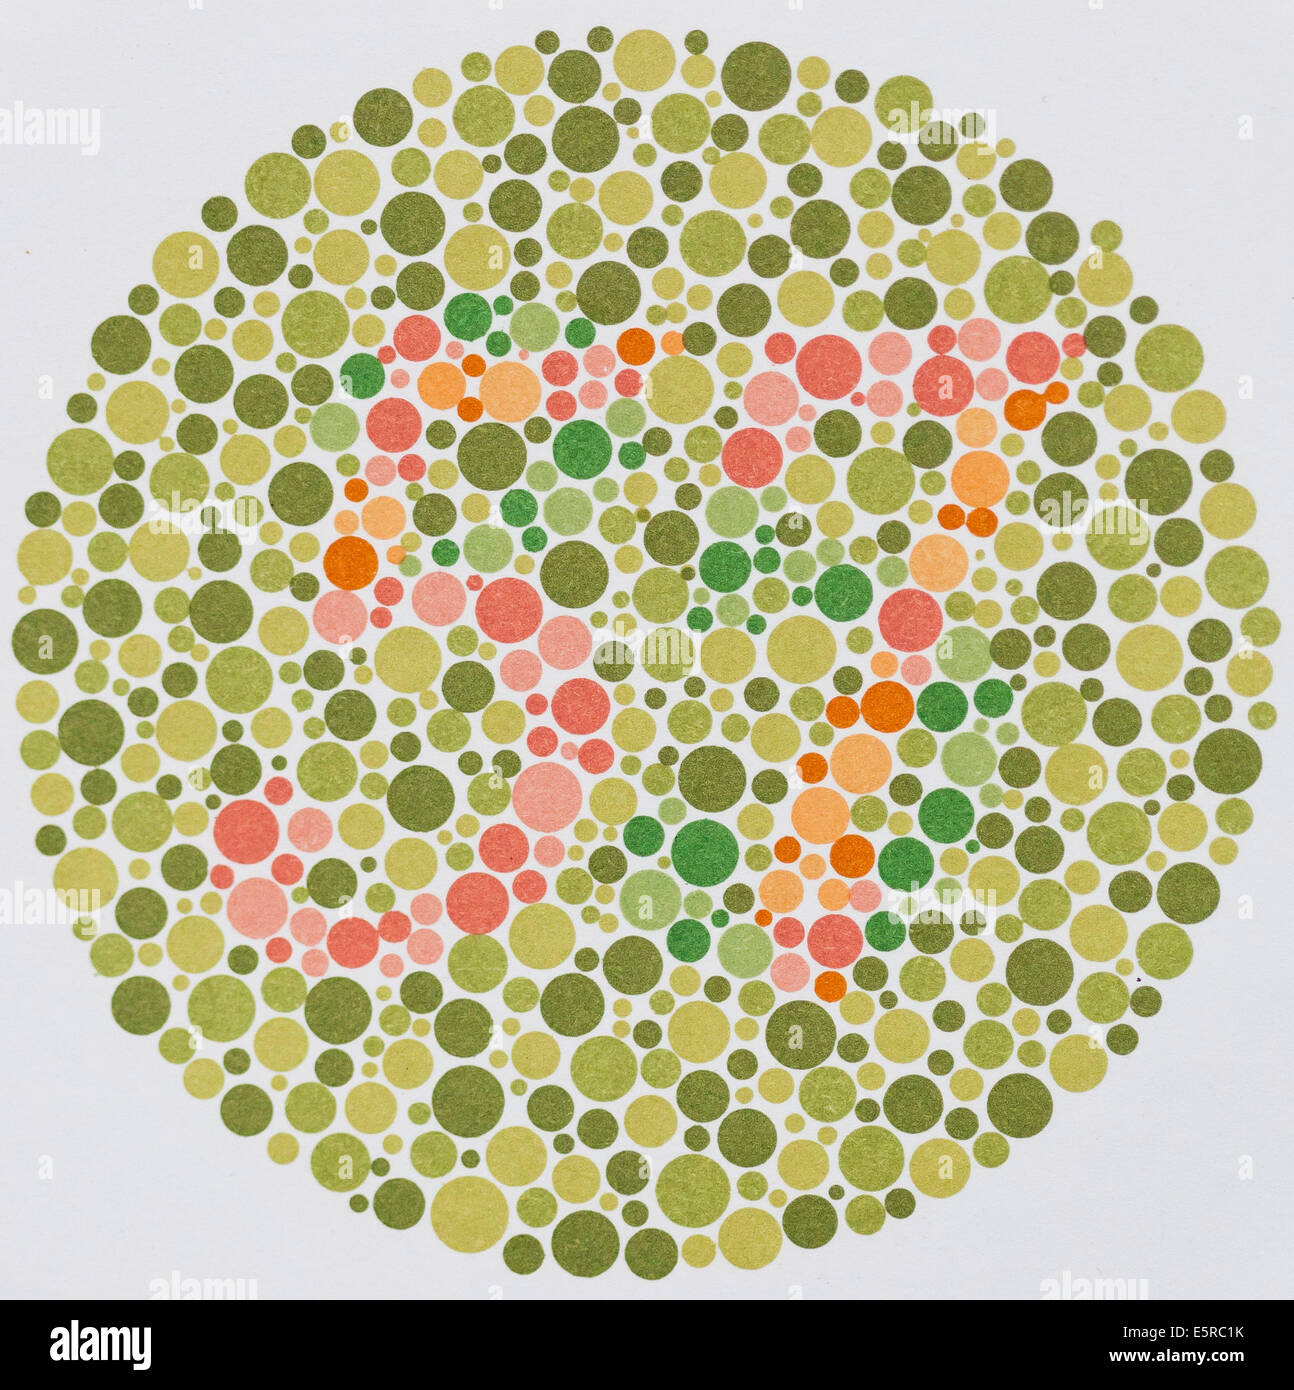 Color Blindness Chart Pdf